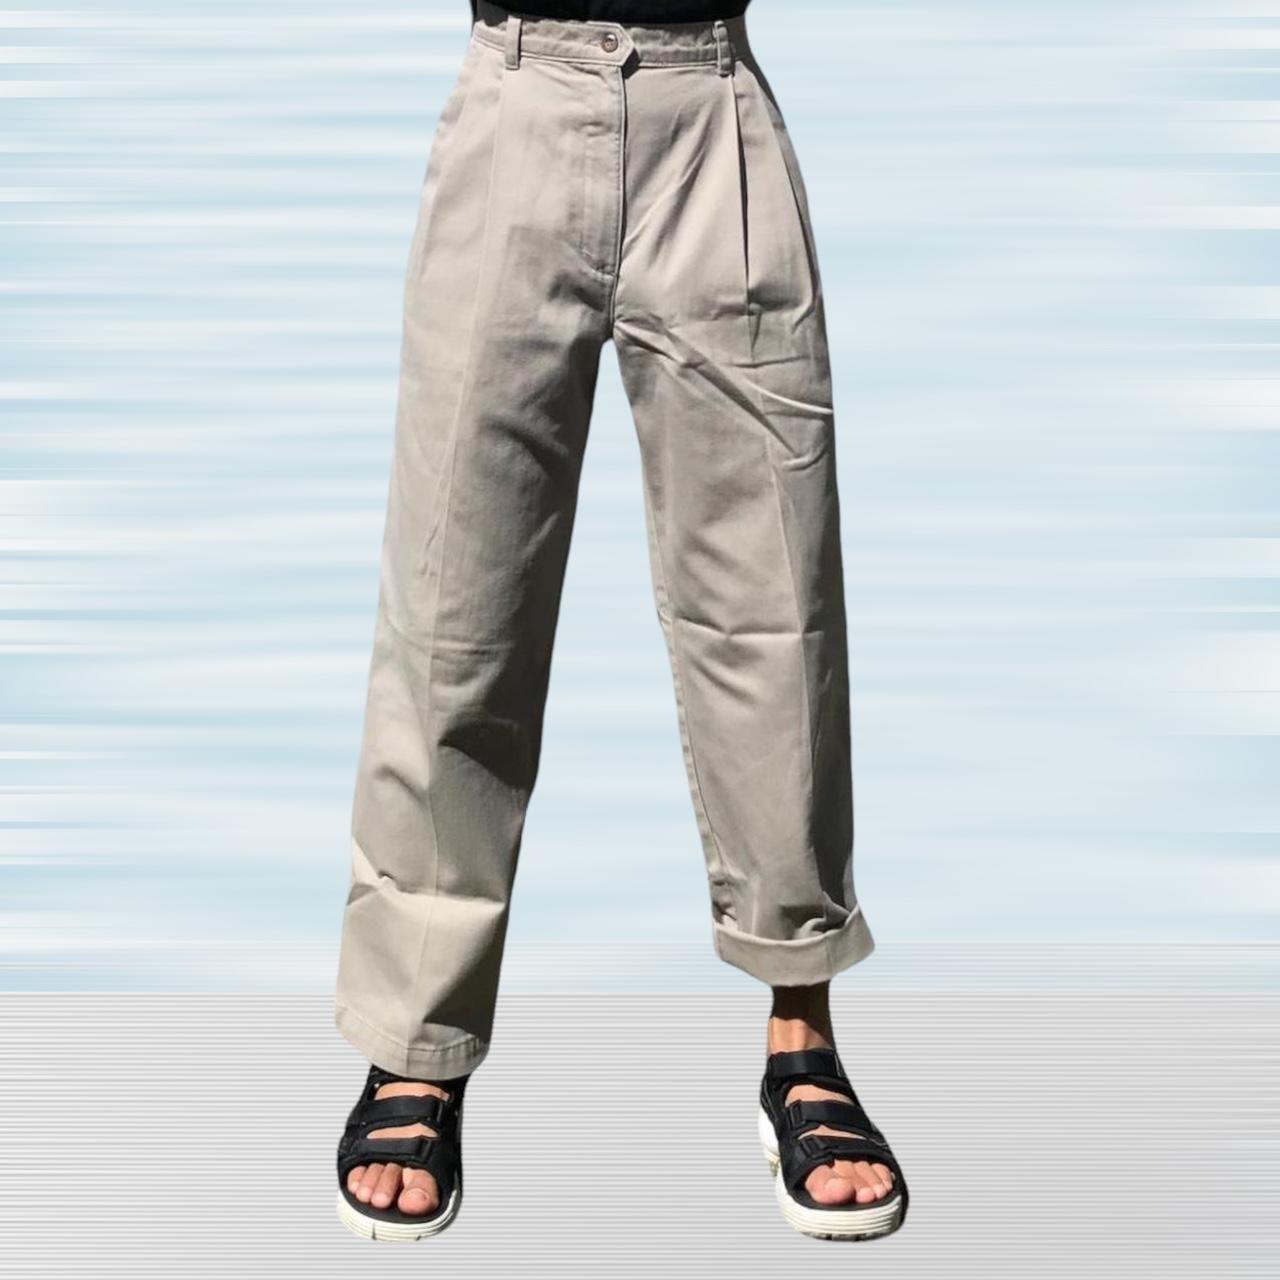 Jean Cut Pants Straight Fit  Dockers